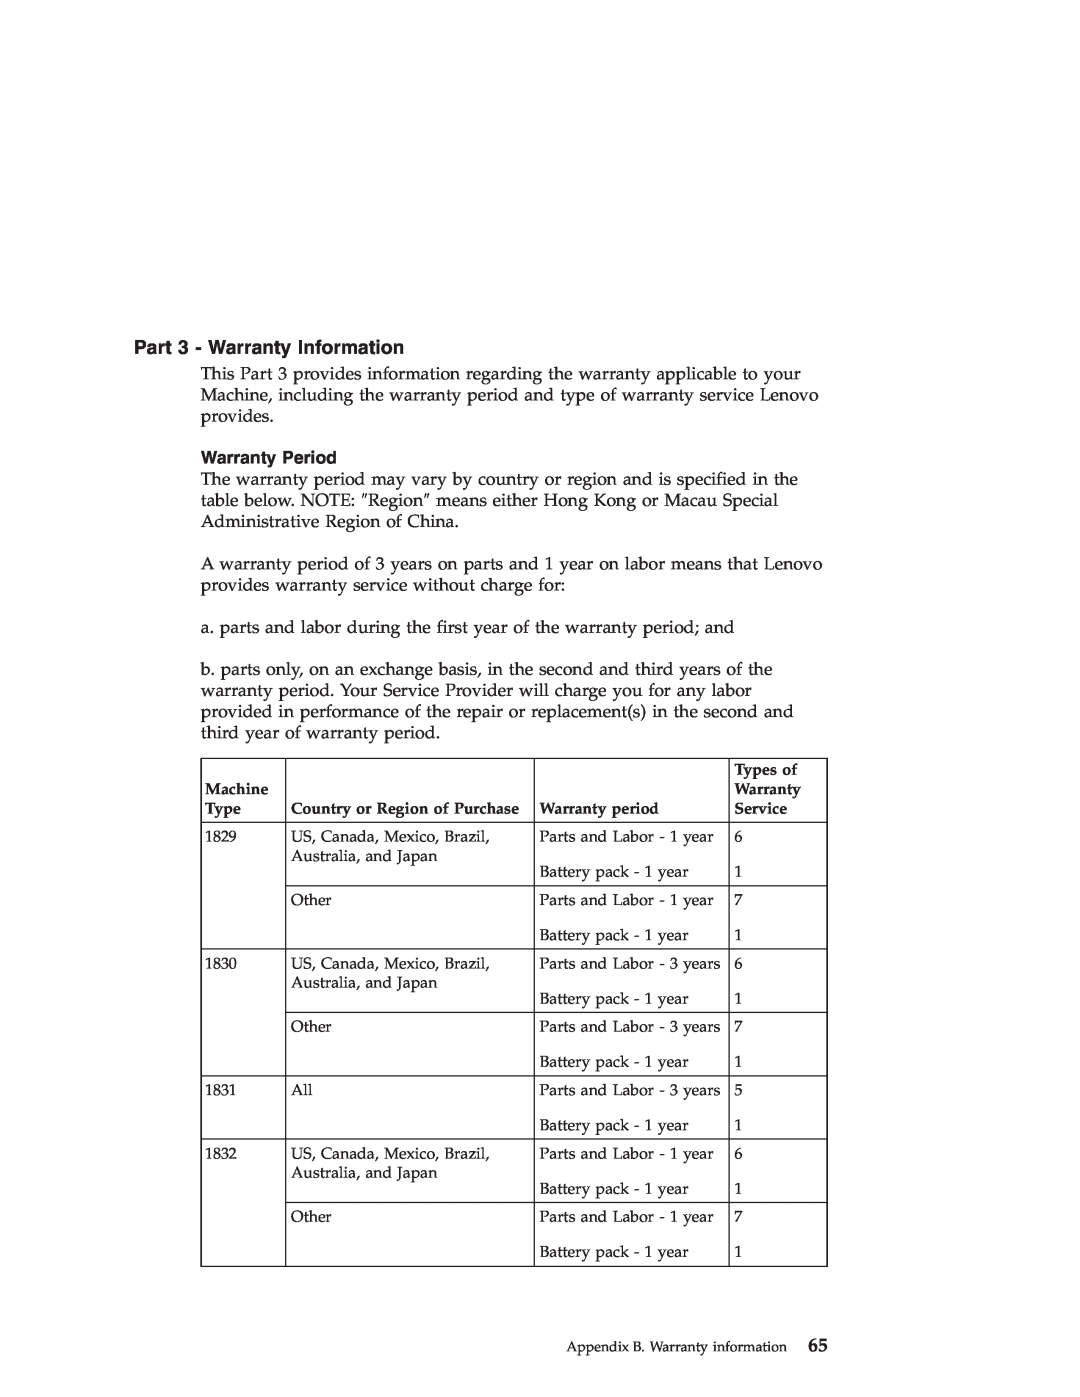 Lenovo R50 manual Part 3 - Warranty Information, Warranty Period 